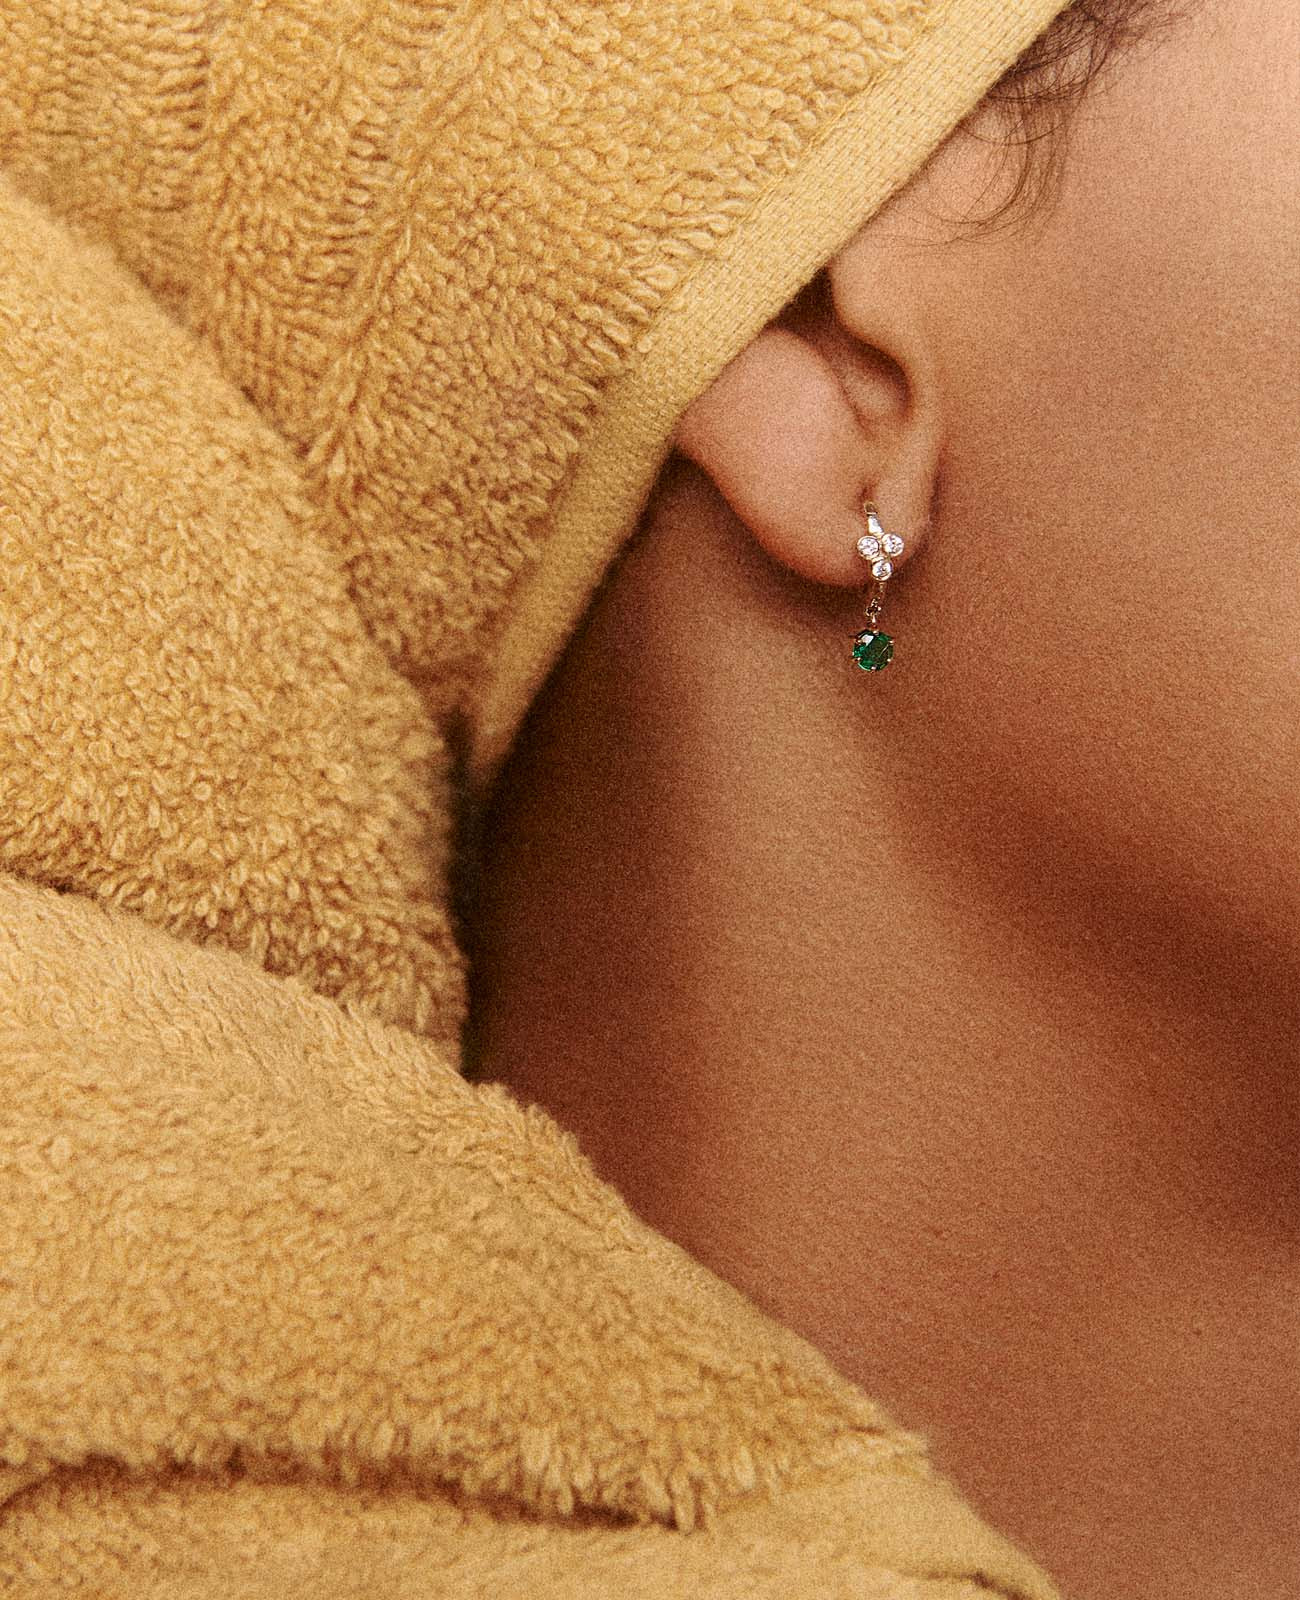 MIRA N°3 earring pascale monvoisin jewelry paris